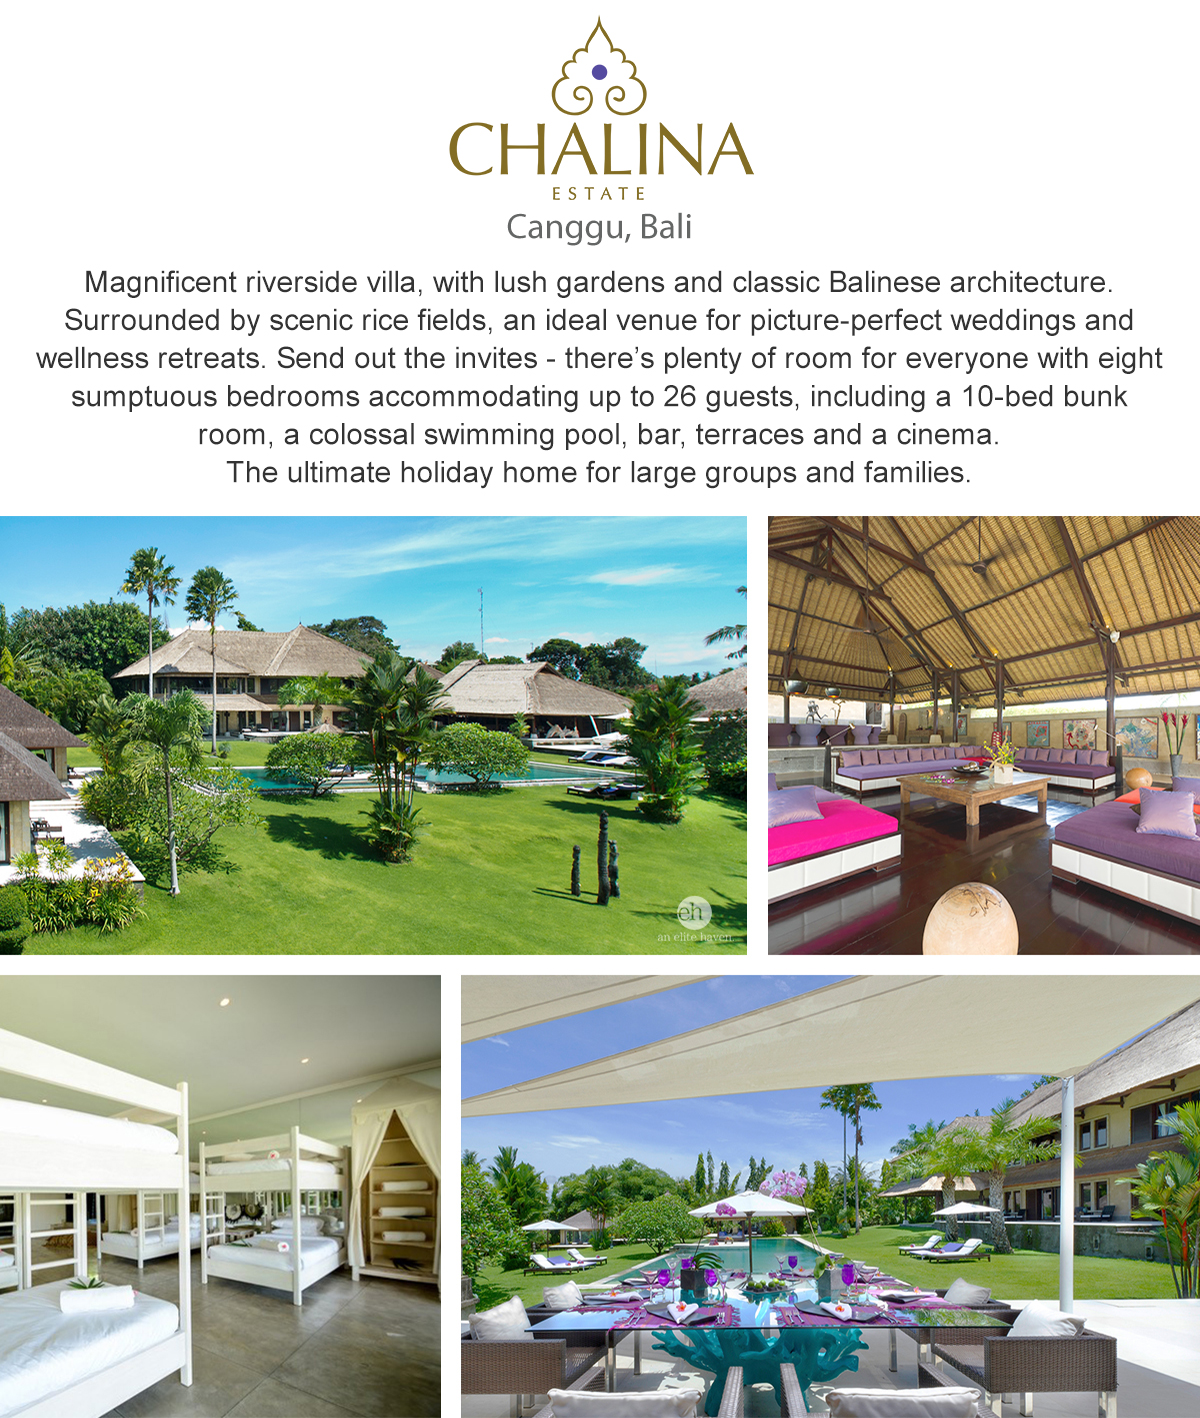 Chalina Estate - Canggu, Bali